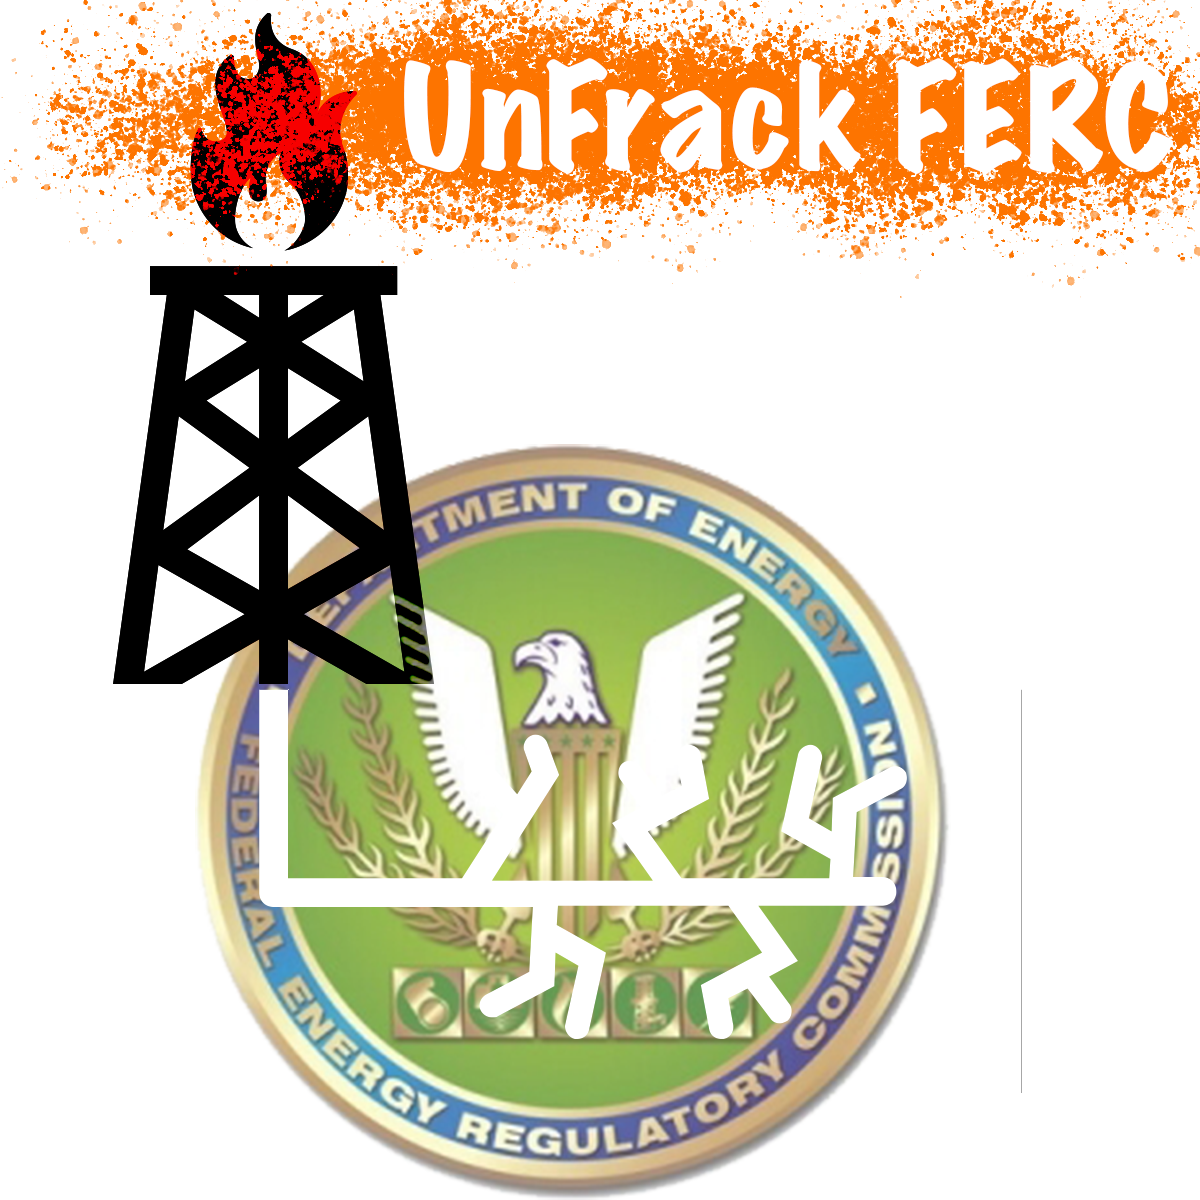 UnFrack FERC